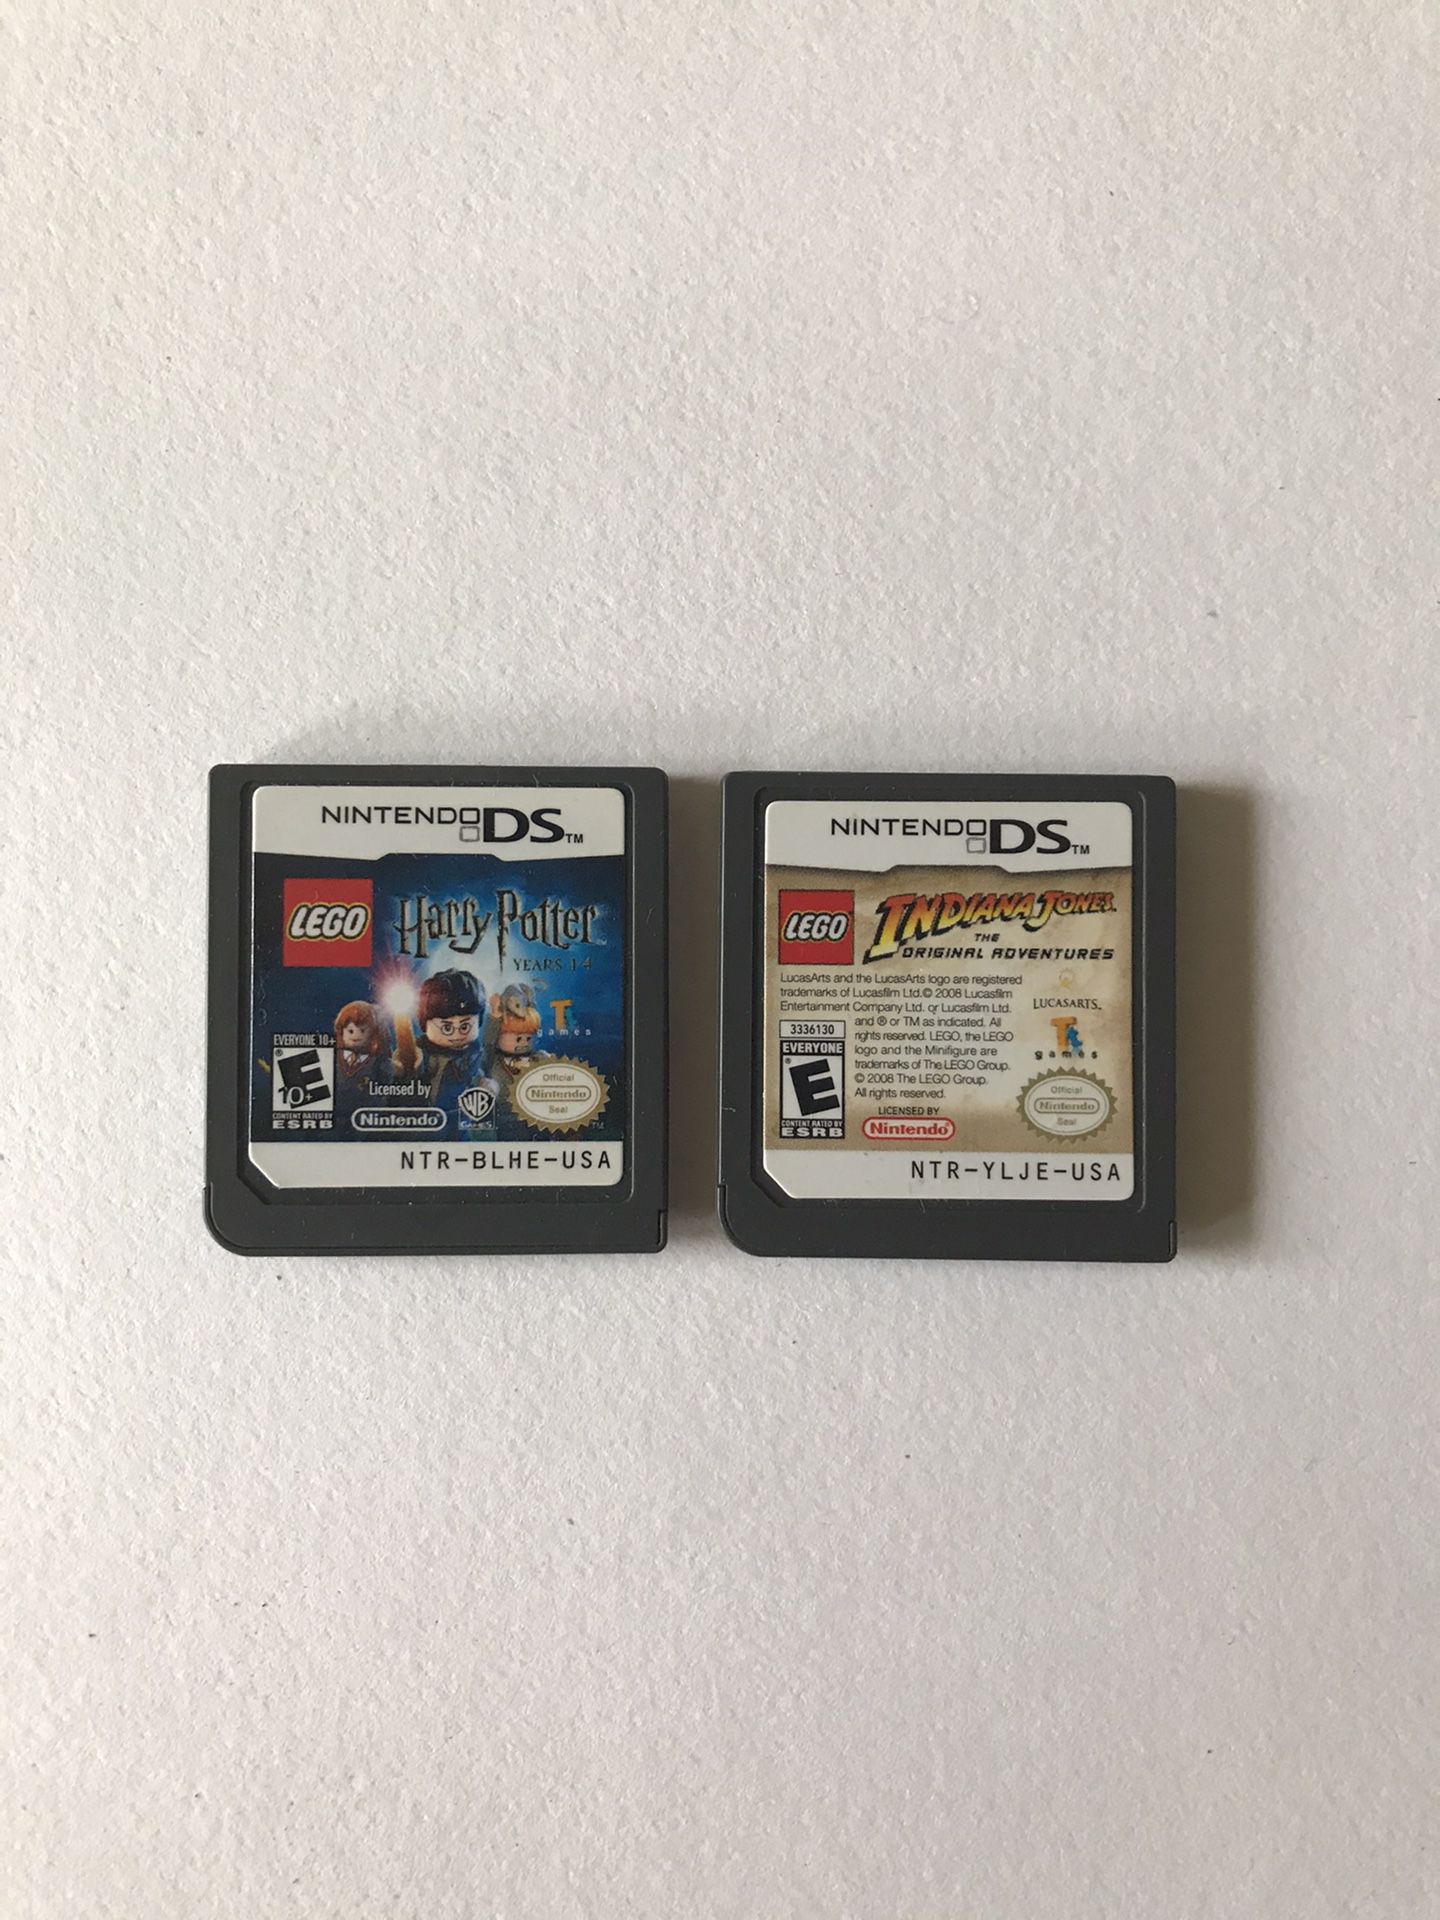 Nintendo DS LEGO Harry Potter + LEGO Indiana Jones (2 For 1)